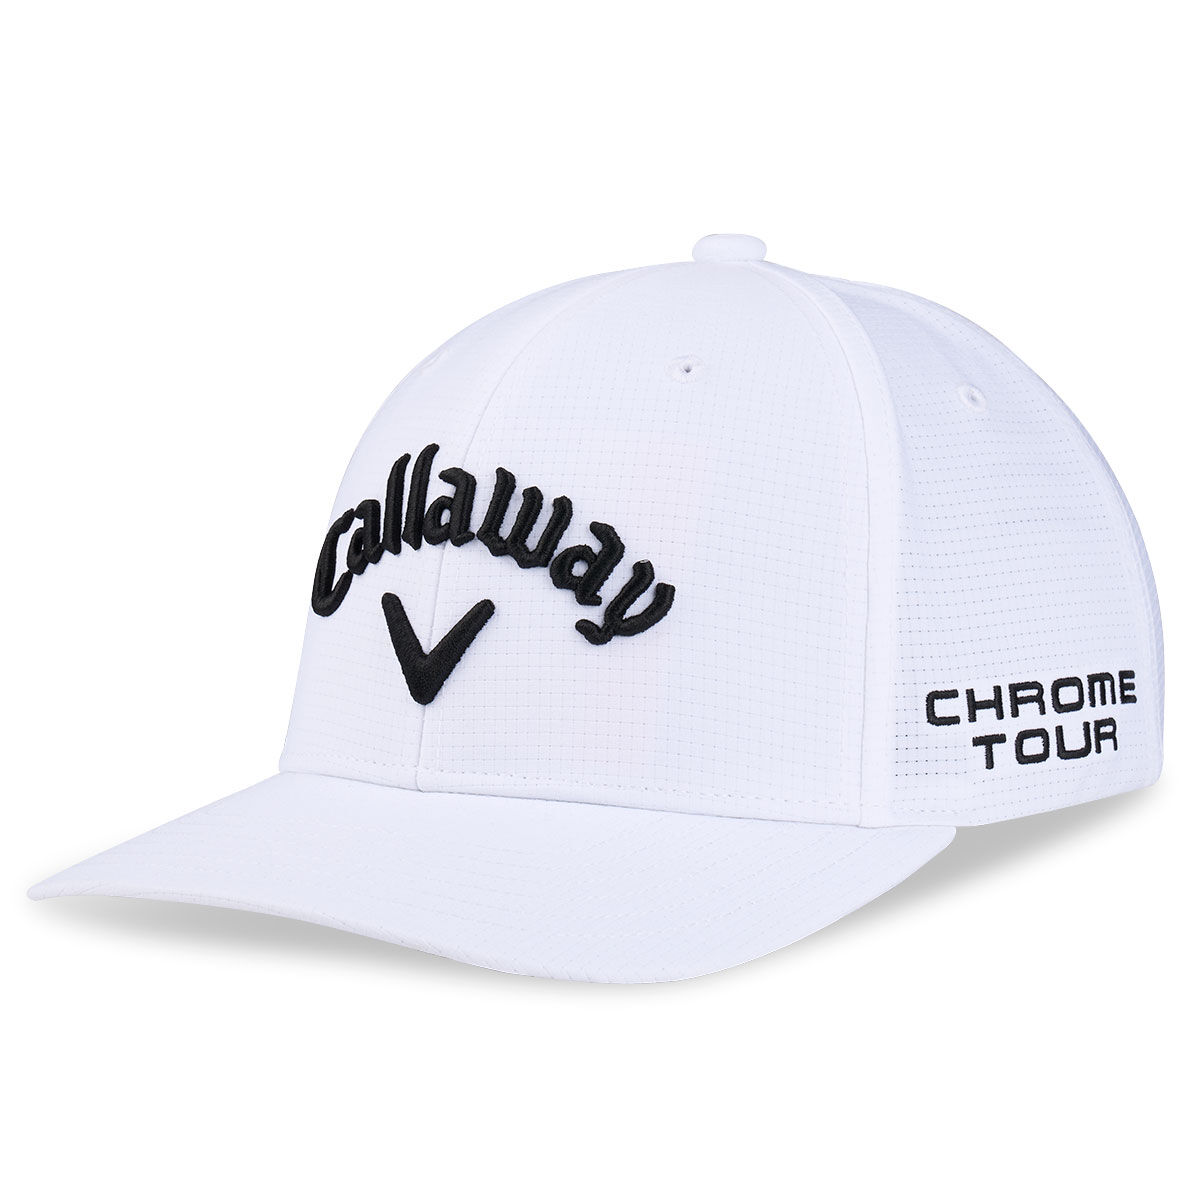 Callaway Golf Mens White and Black Adjustable Tour Authentic Performance Pro Golf Cap | American Golf von Callaway Golf